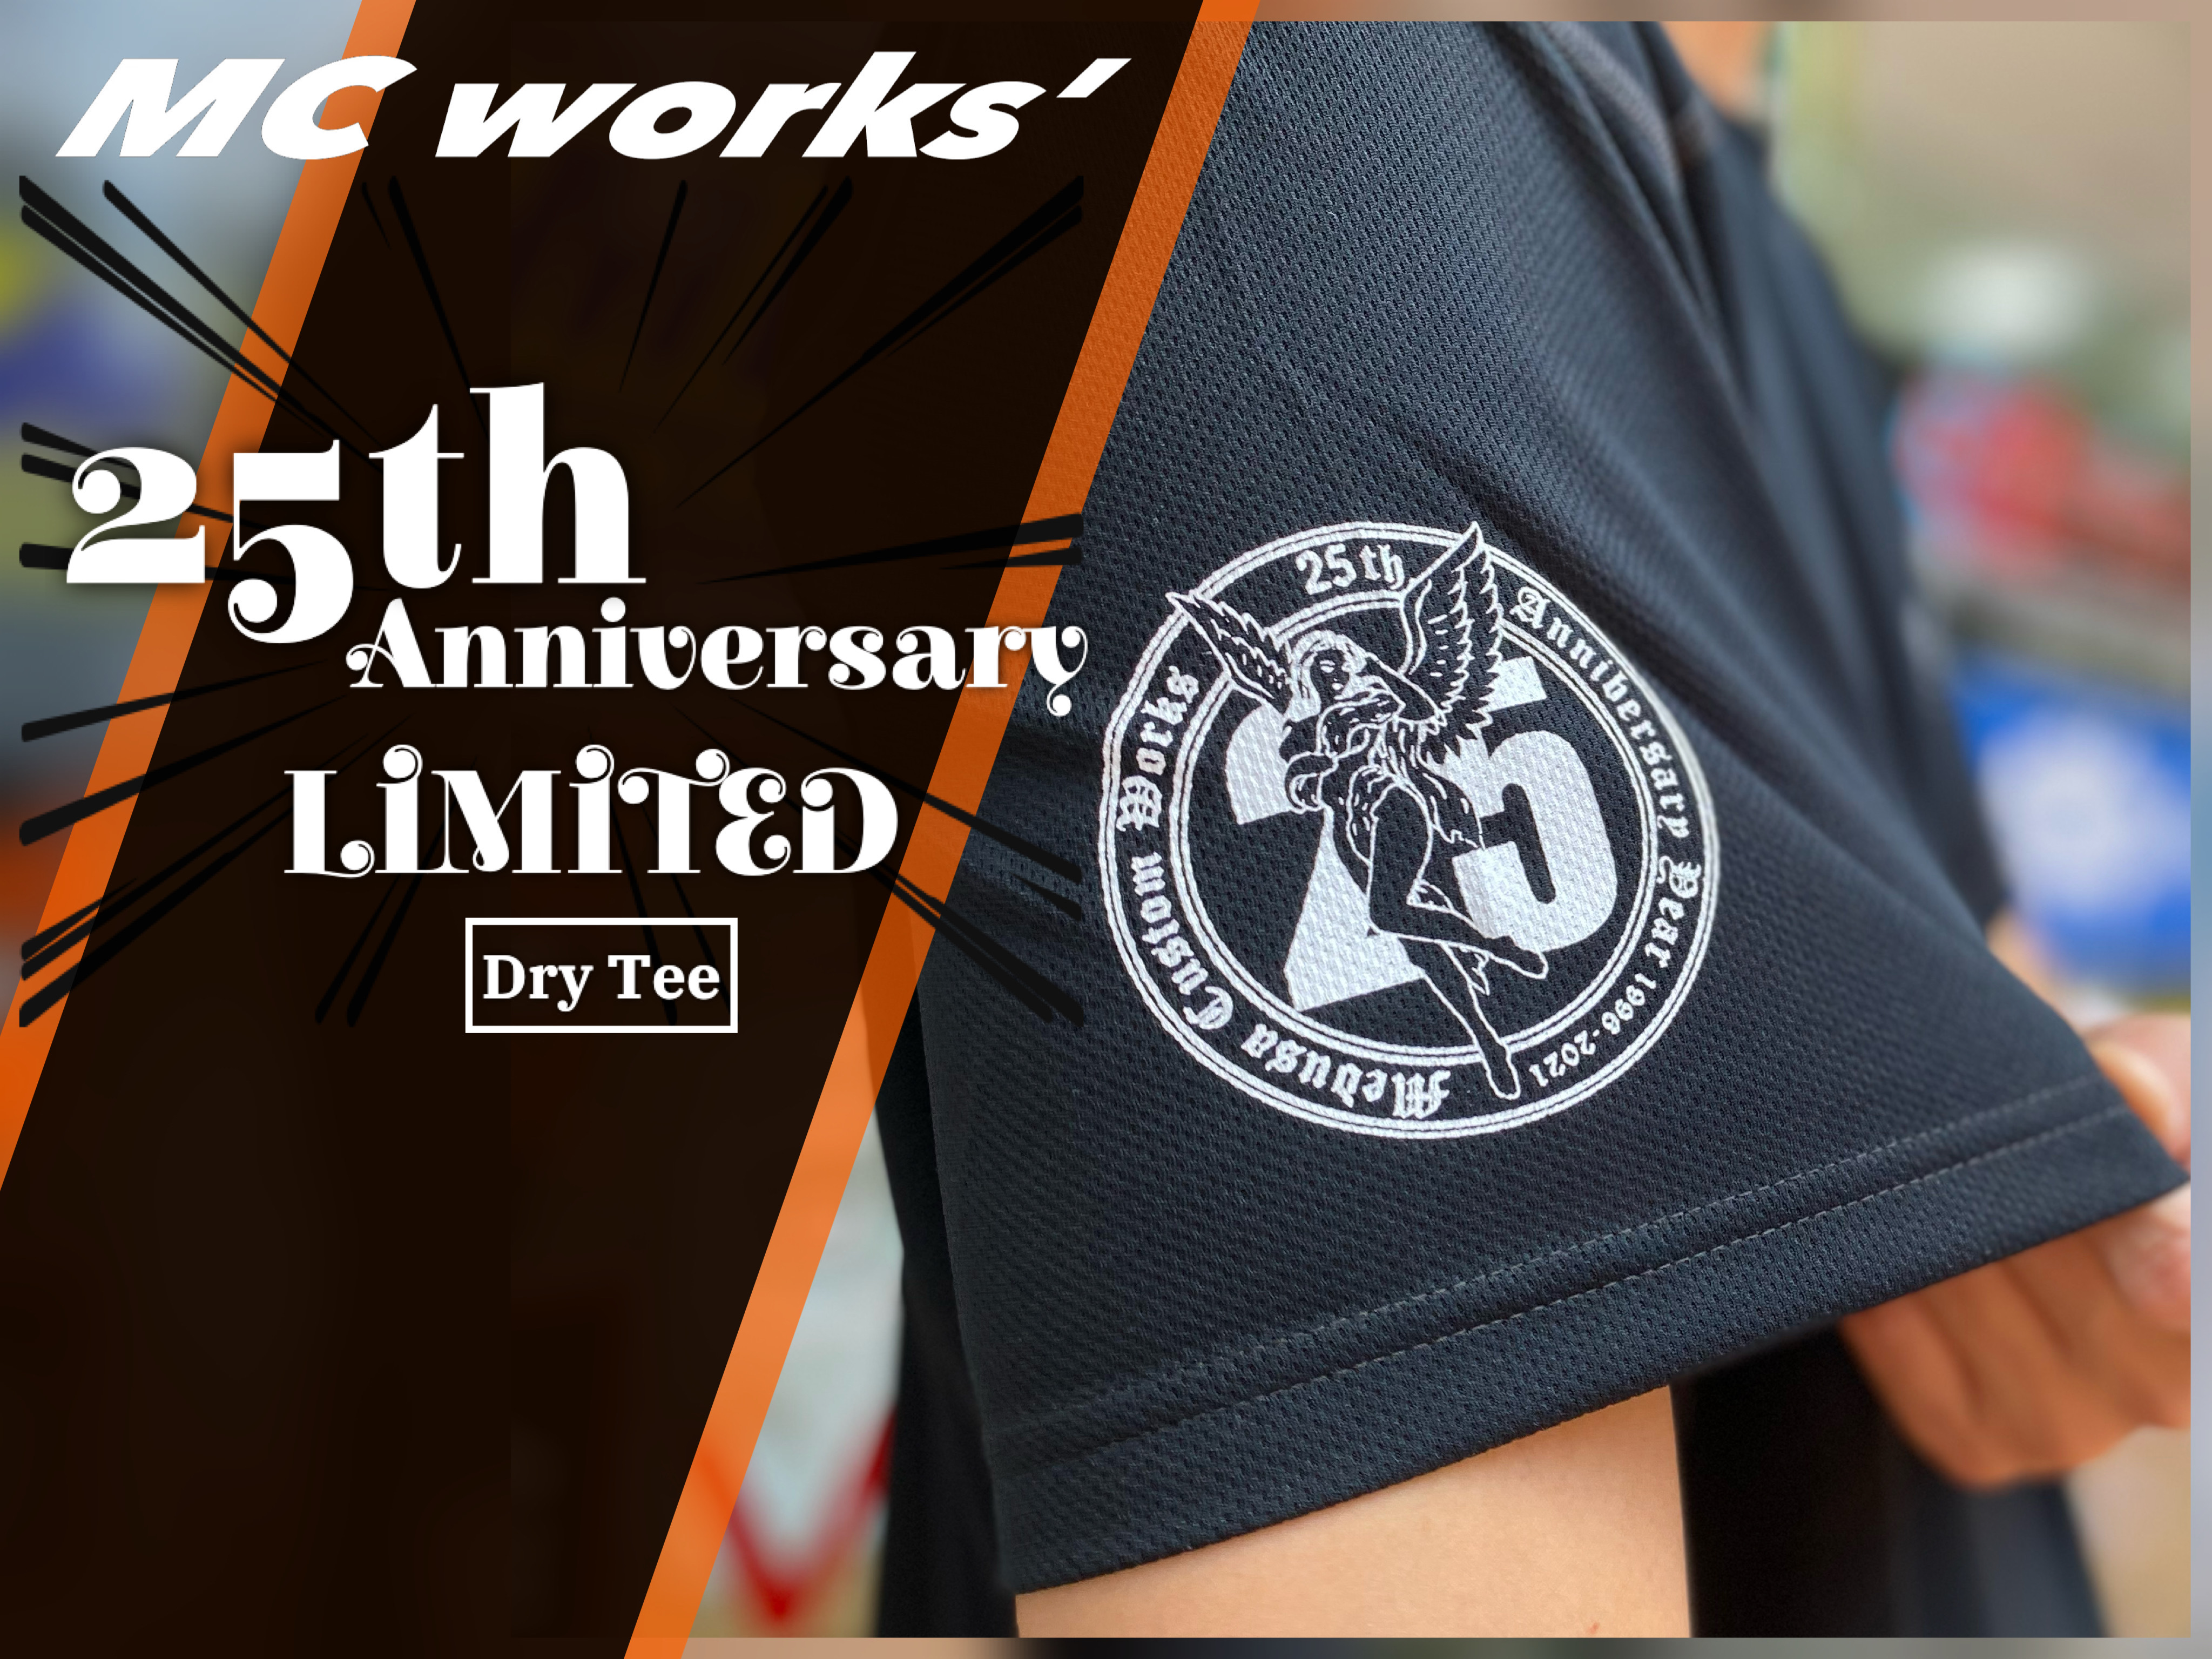 MC WORKS' 25th Anniversary Logo Limited Dry Tee